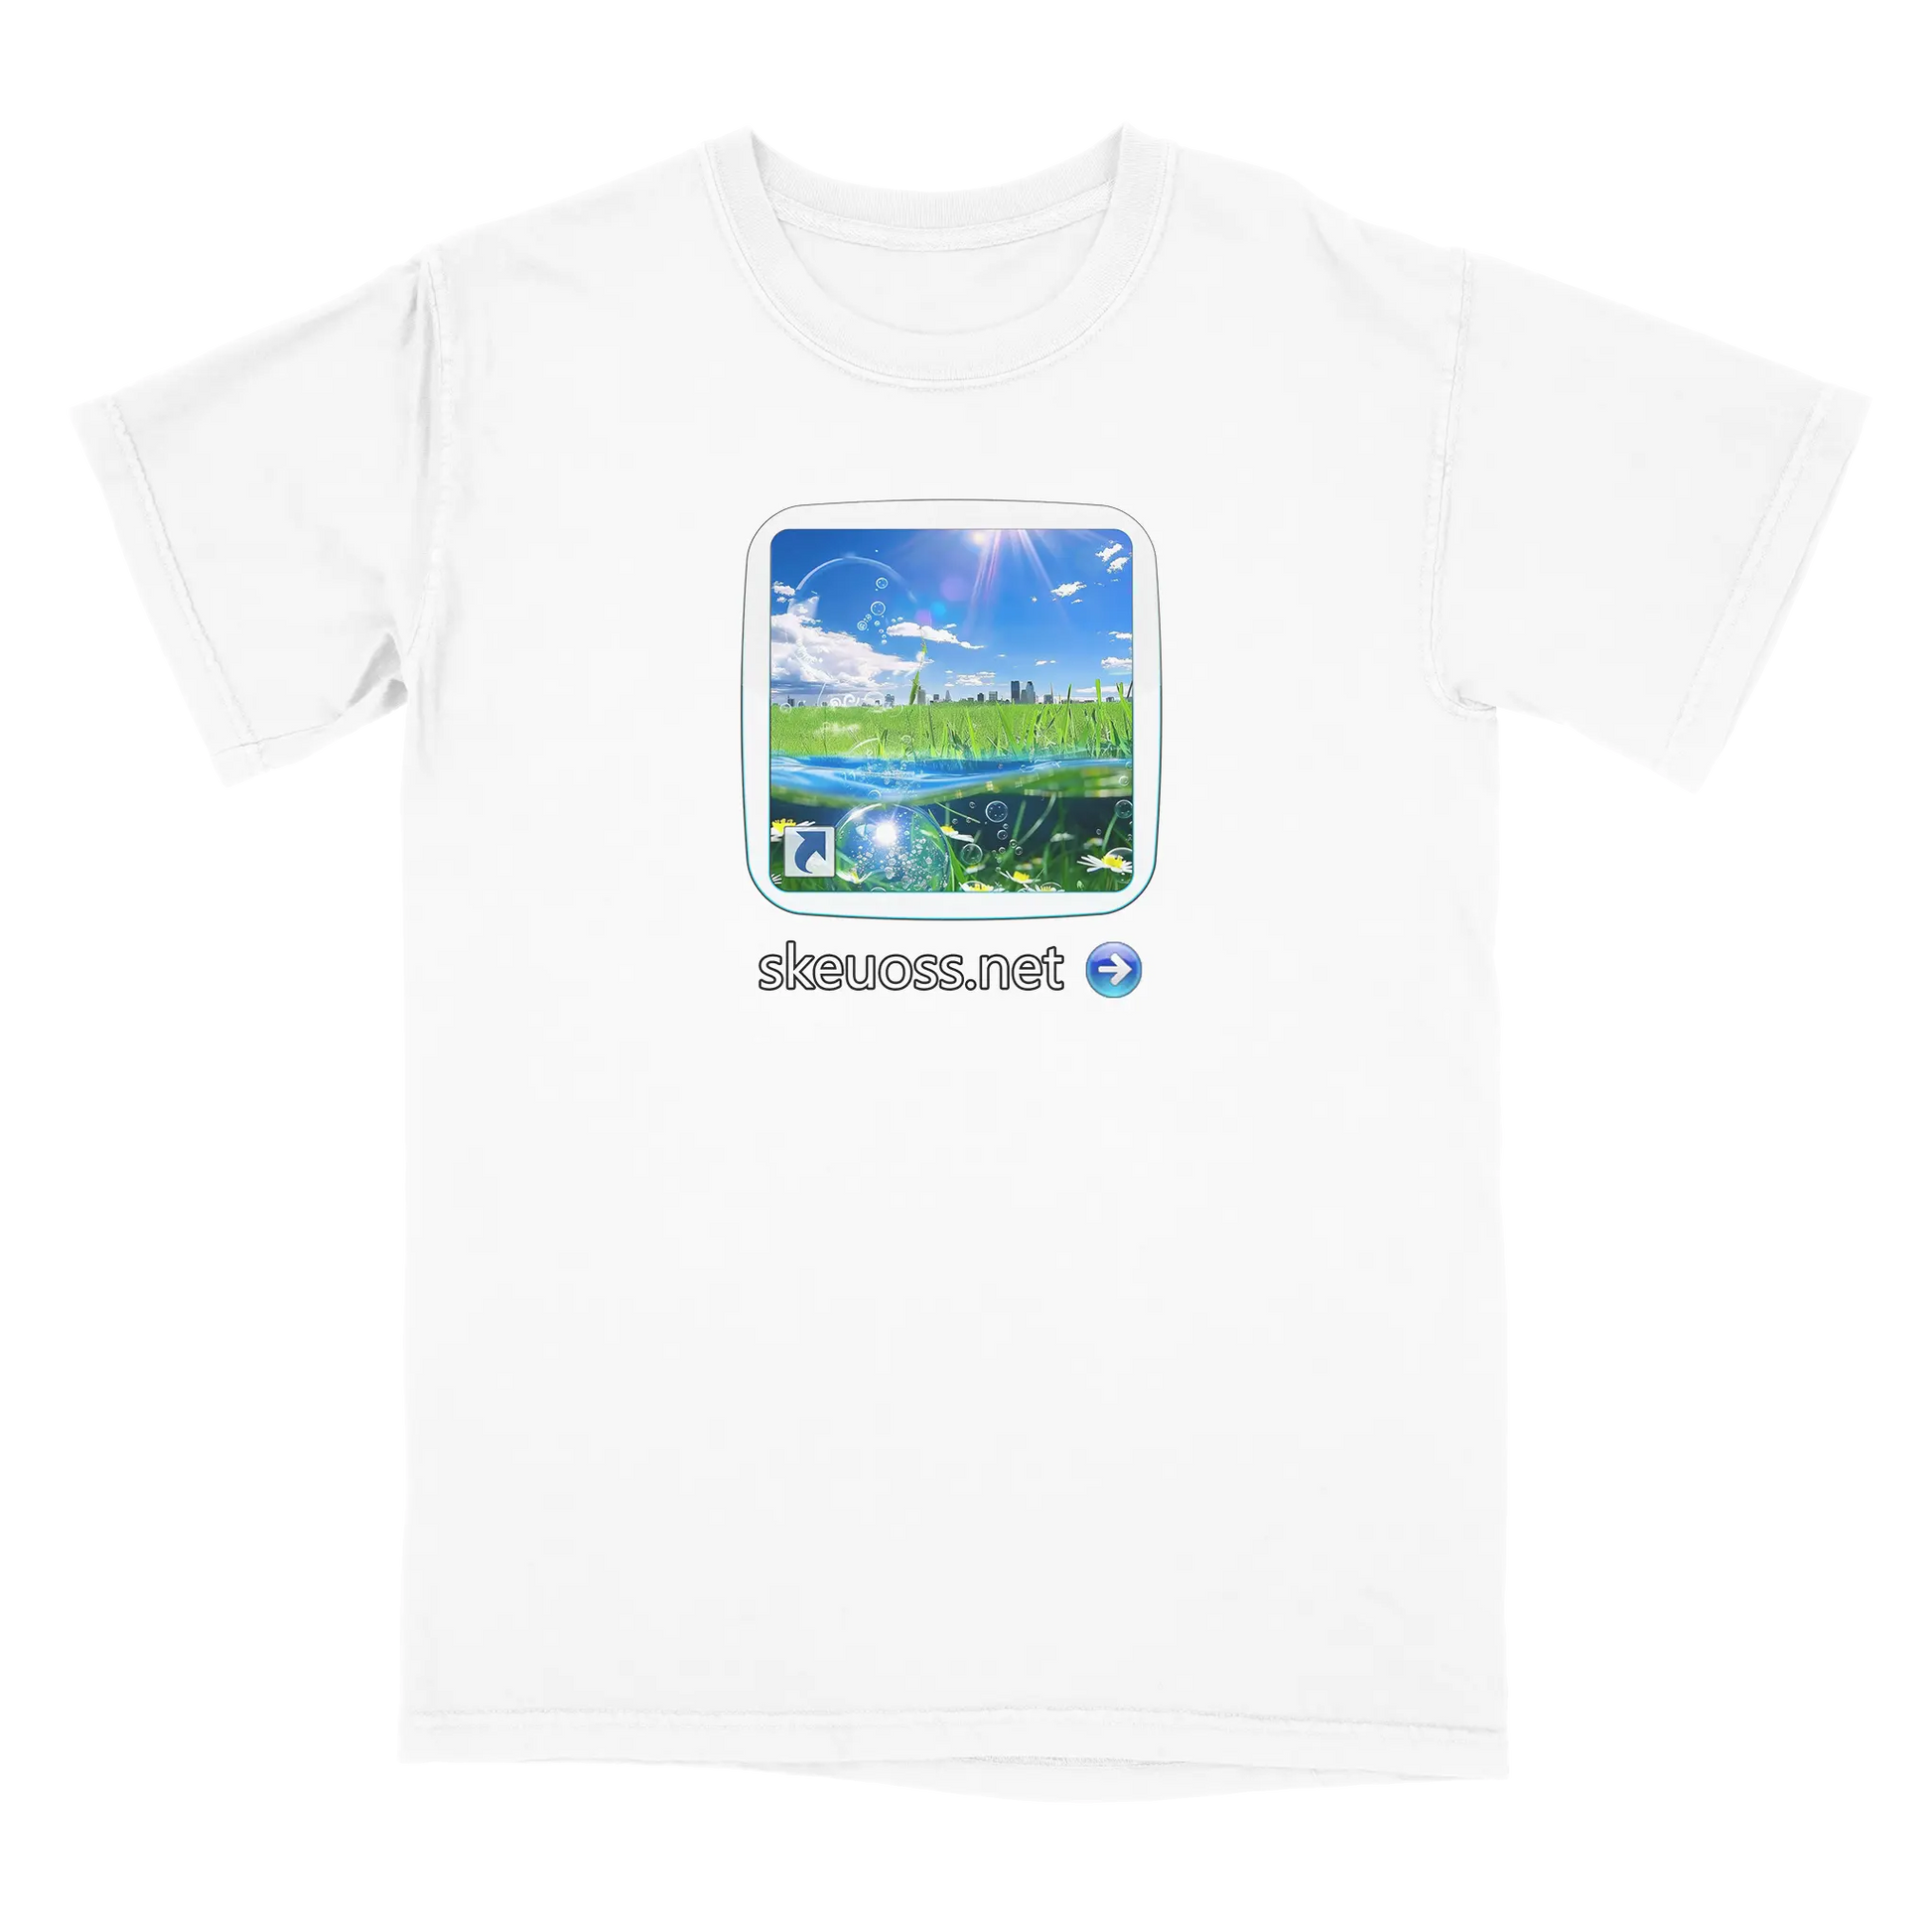 Frutiger Aero T-shirt - User Login Collection - User 218